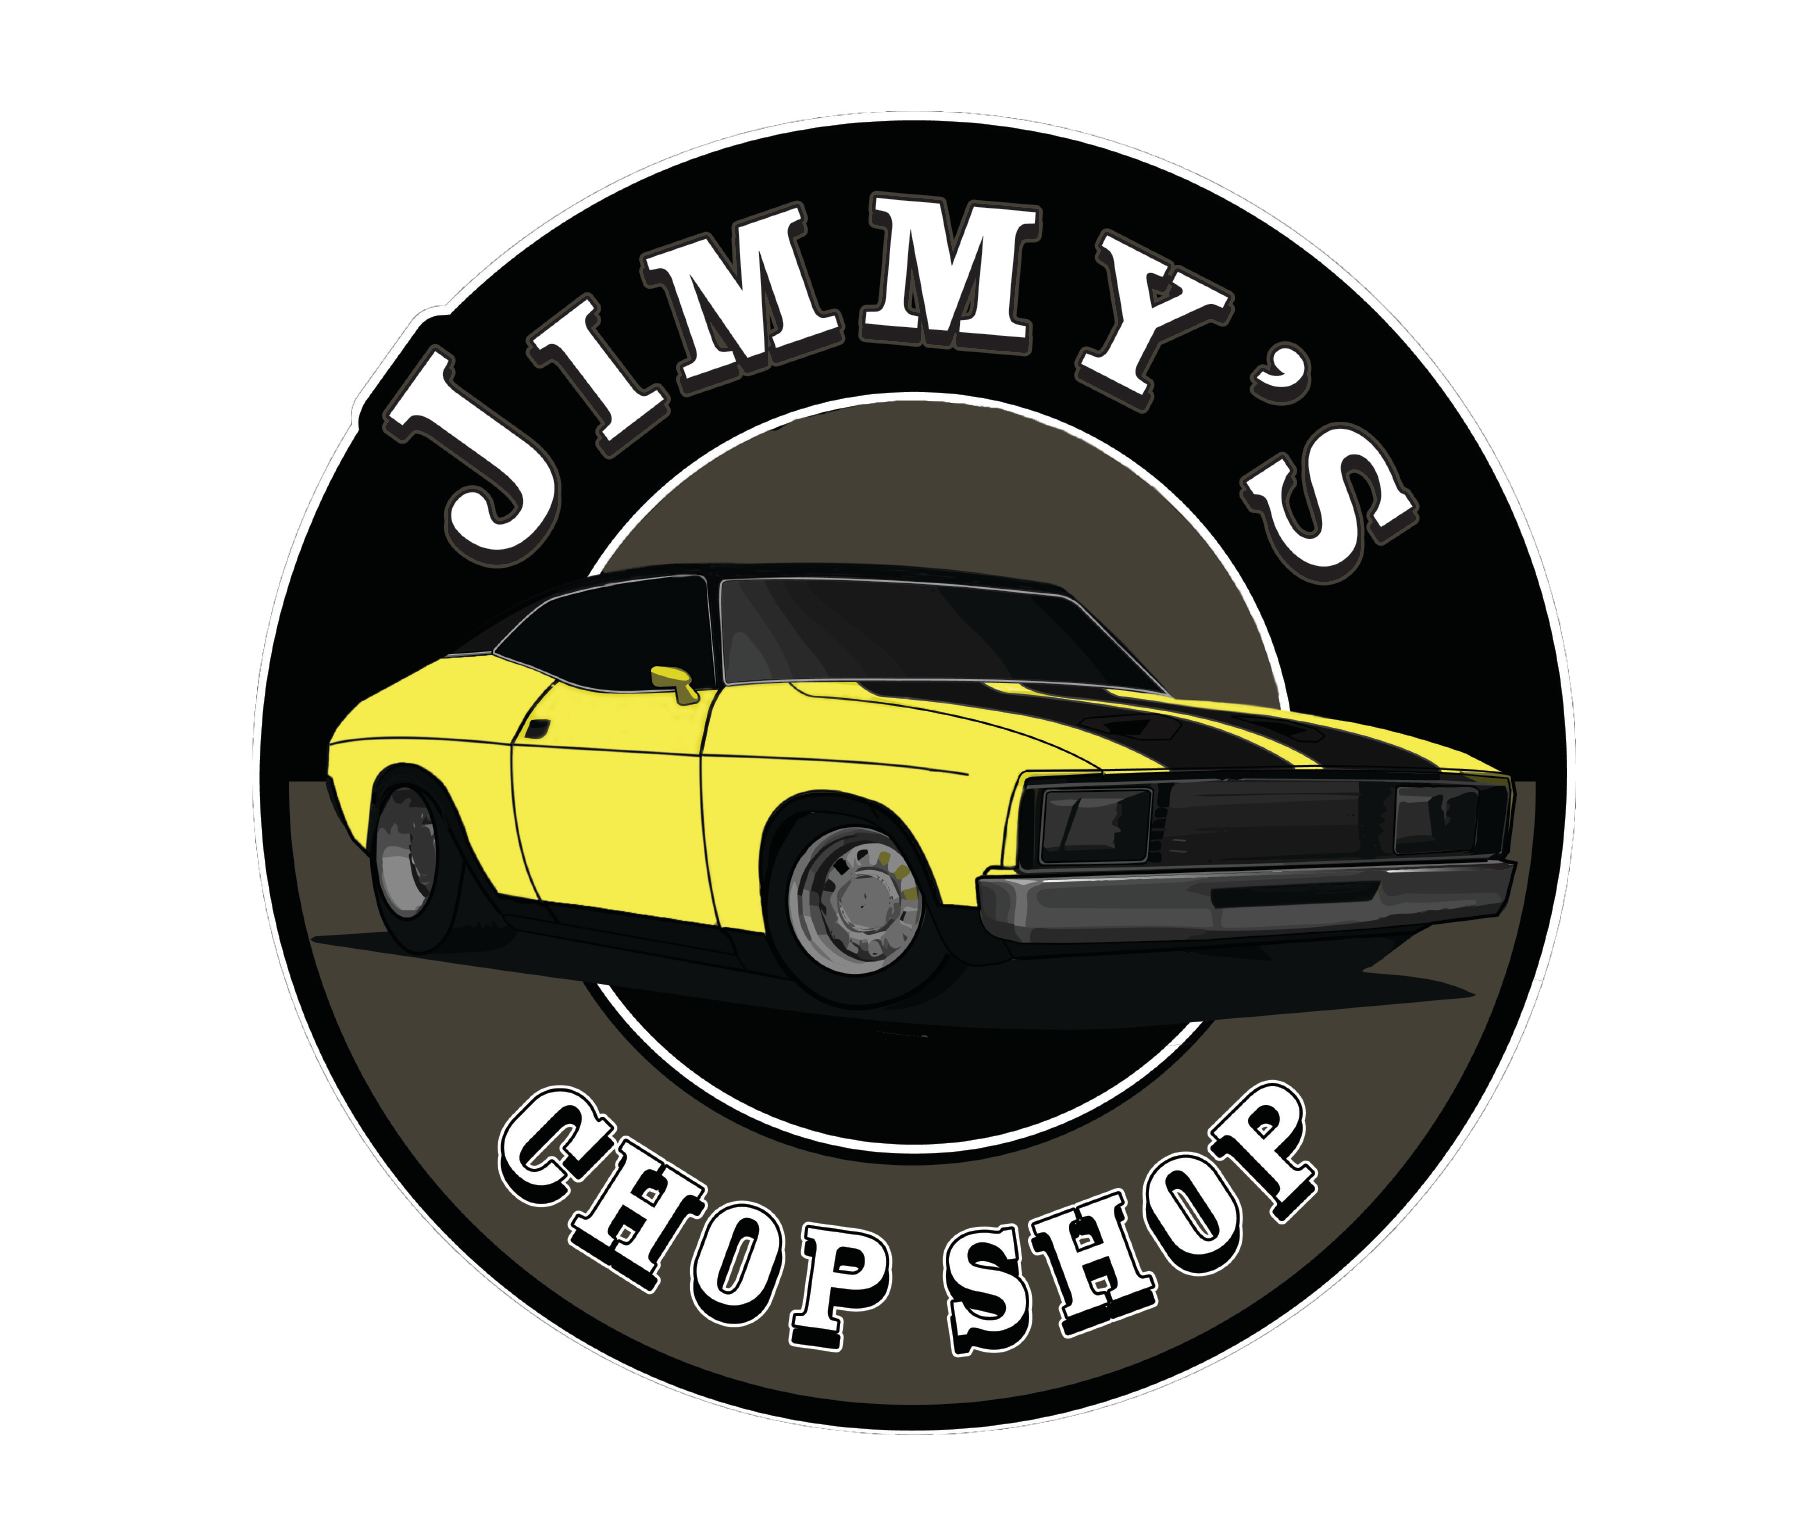 Jimmy's Chop Shop Competition